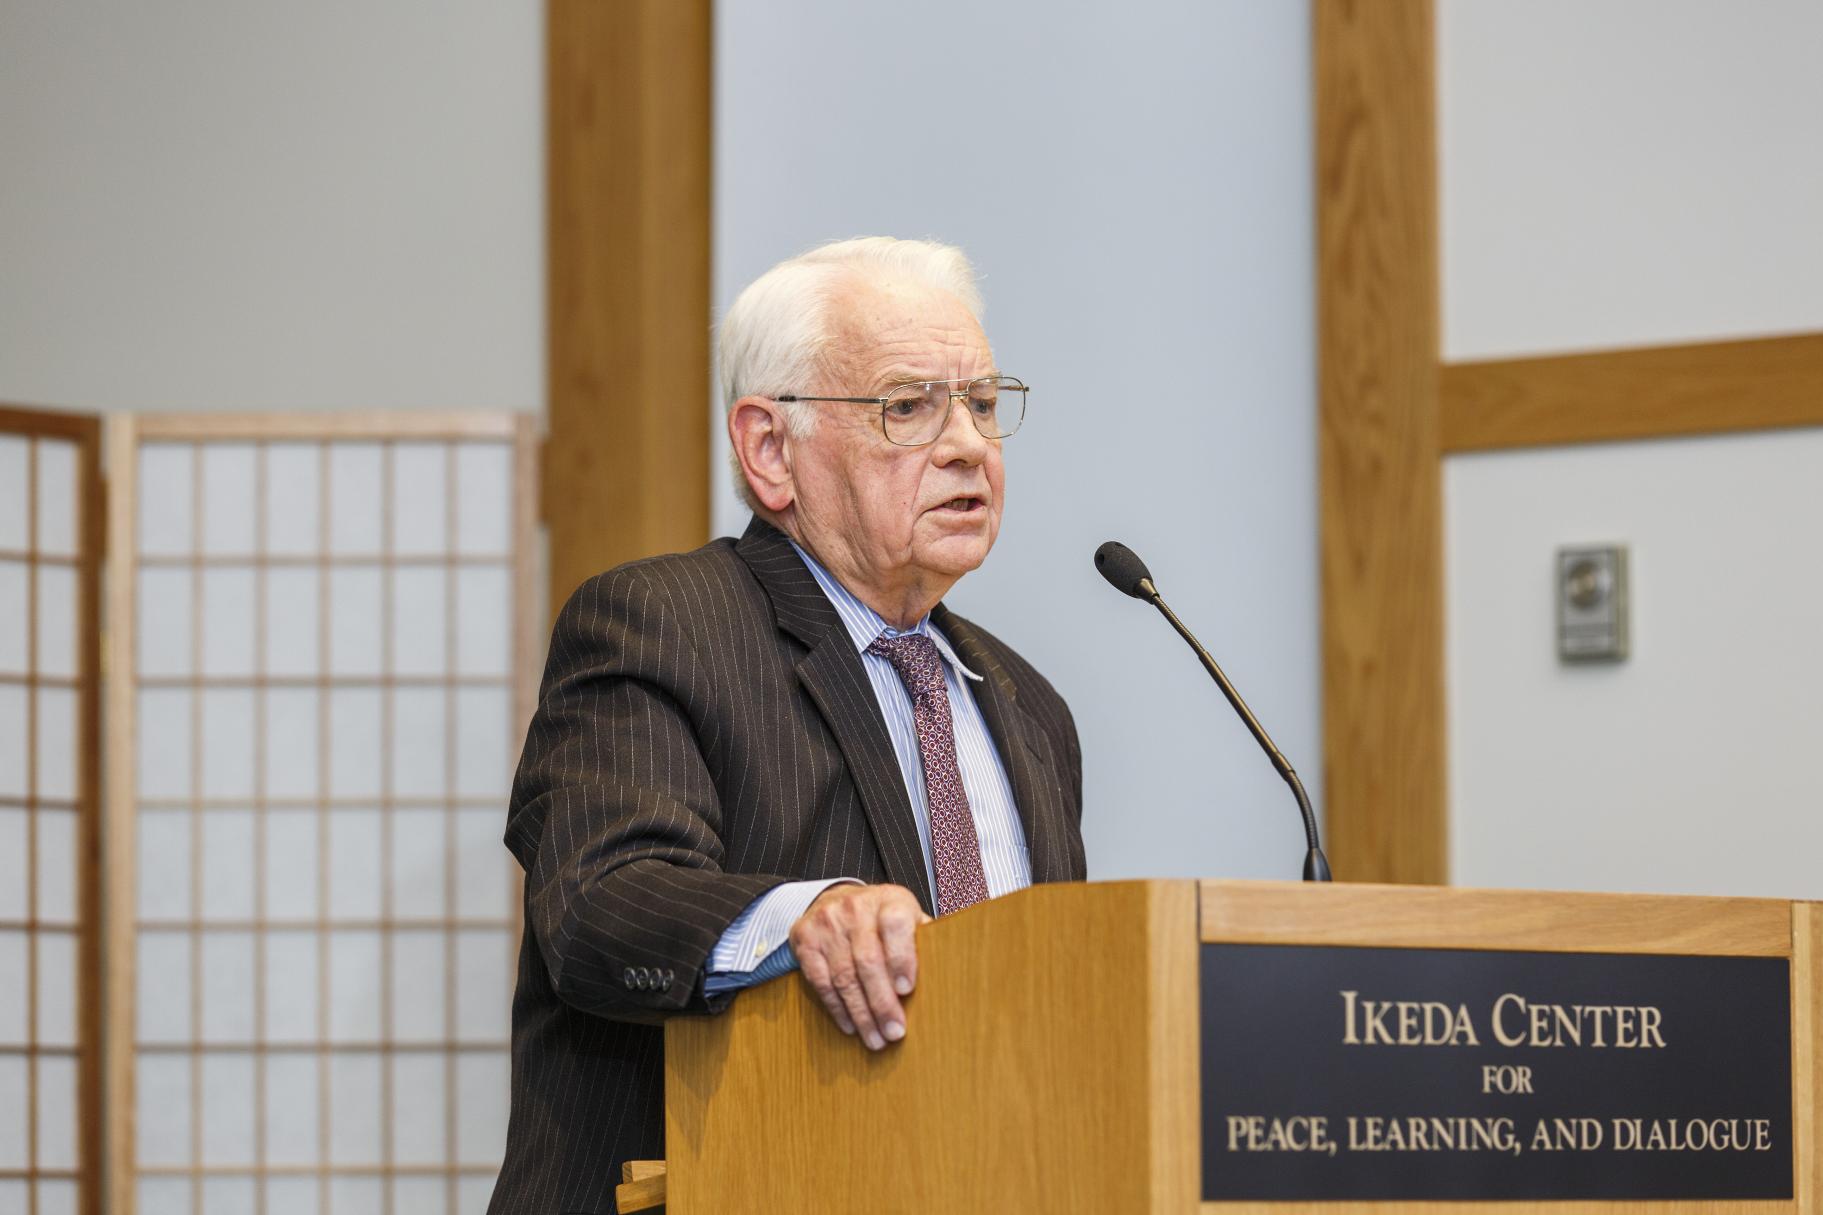 2015 Ikeda Forum speaker Peter Stearns speaking at the podium